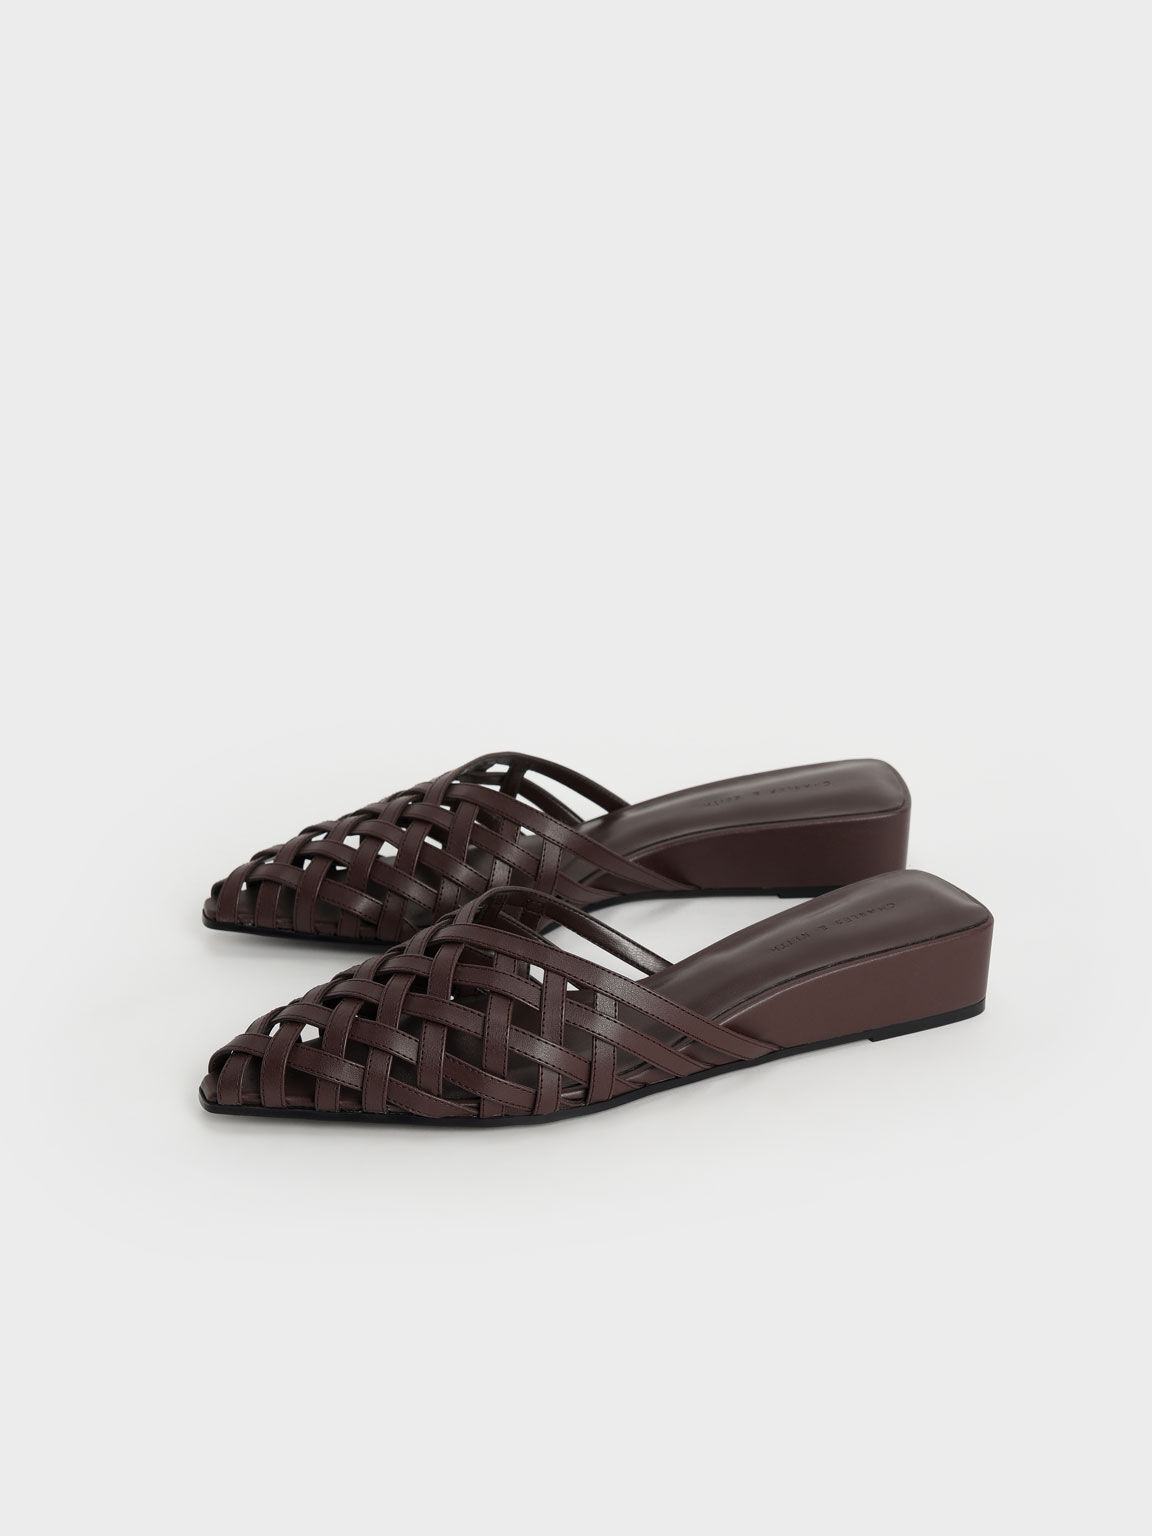 Sepatu Woven Wedges, Dark Brown, hi-res